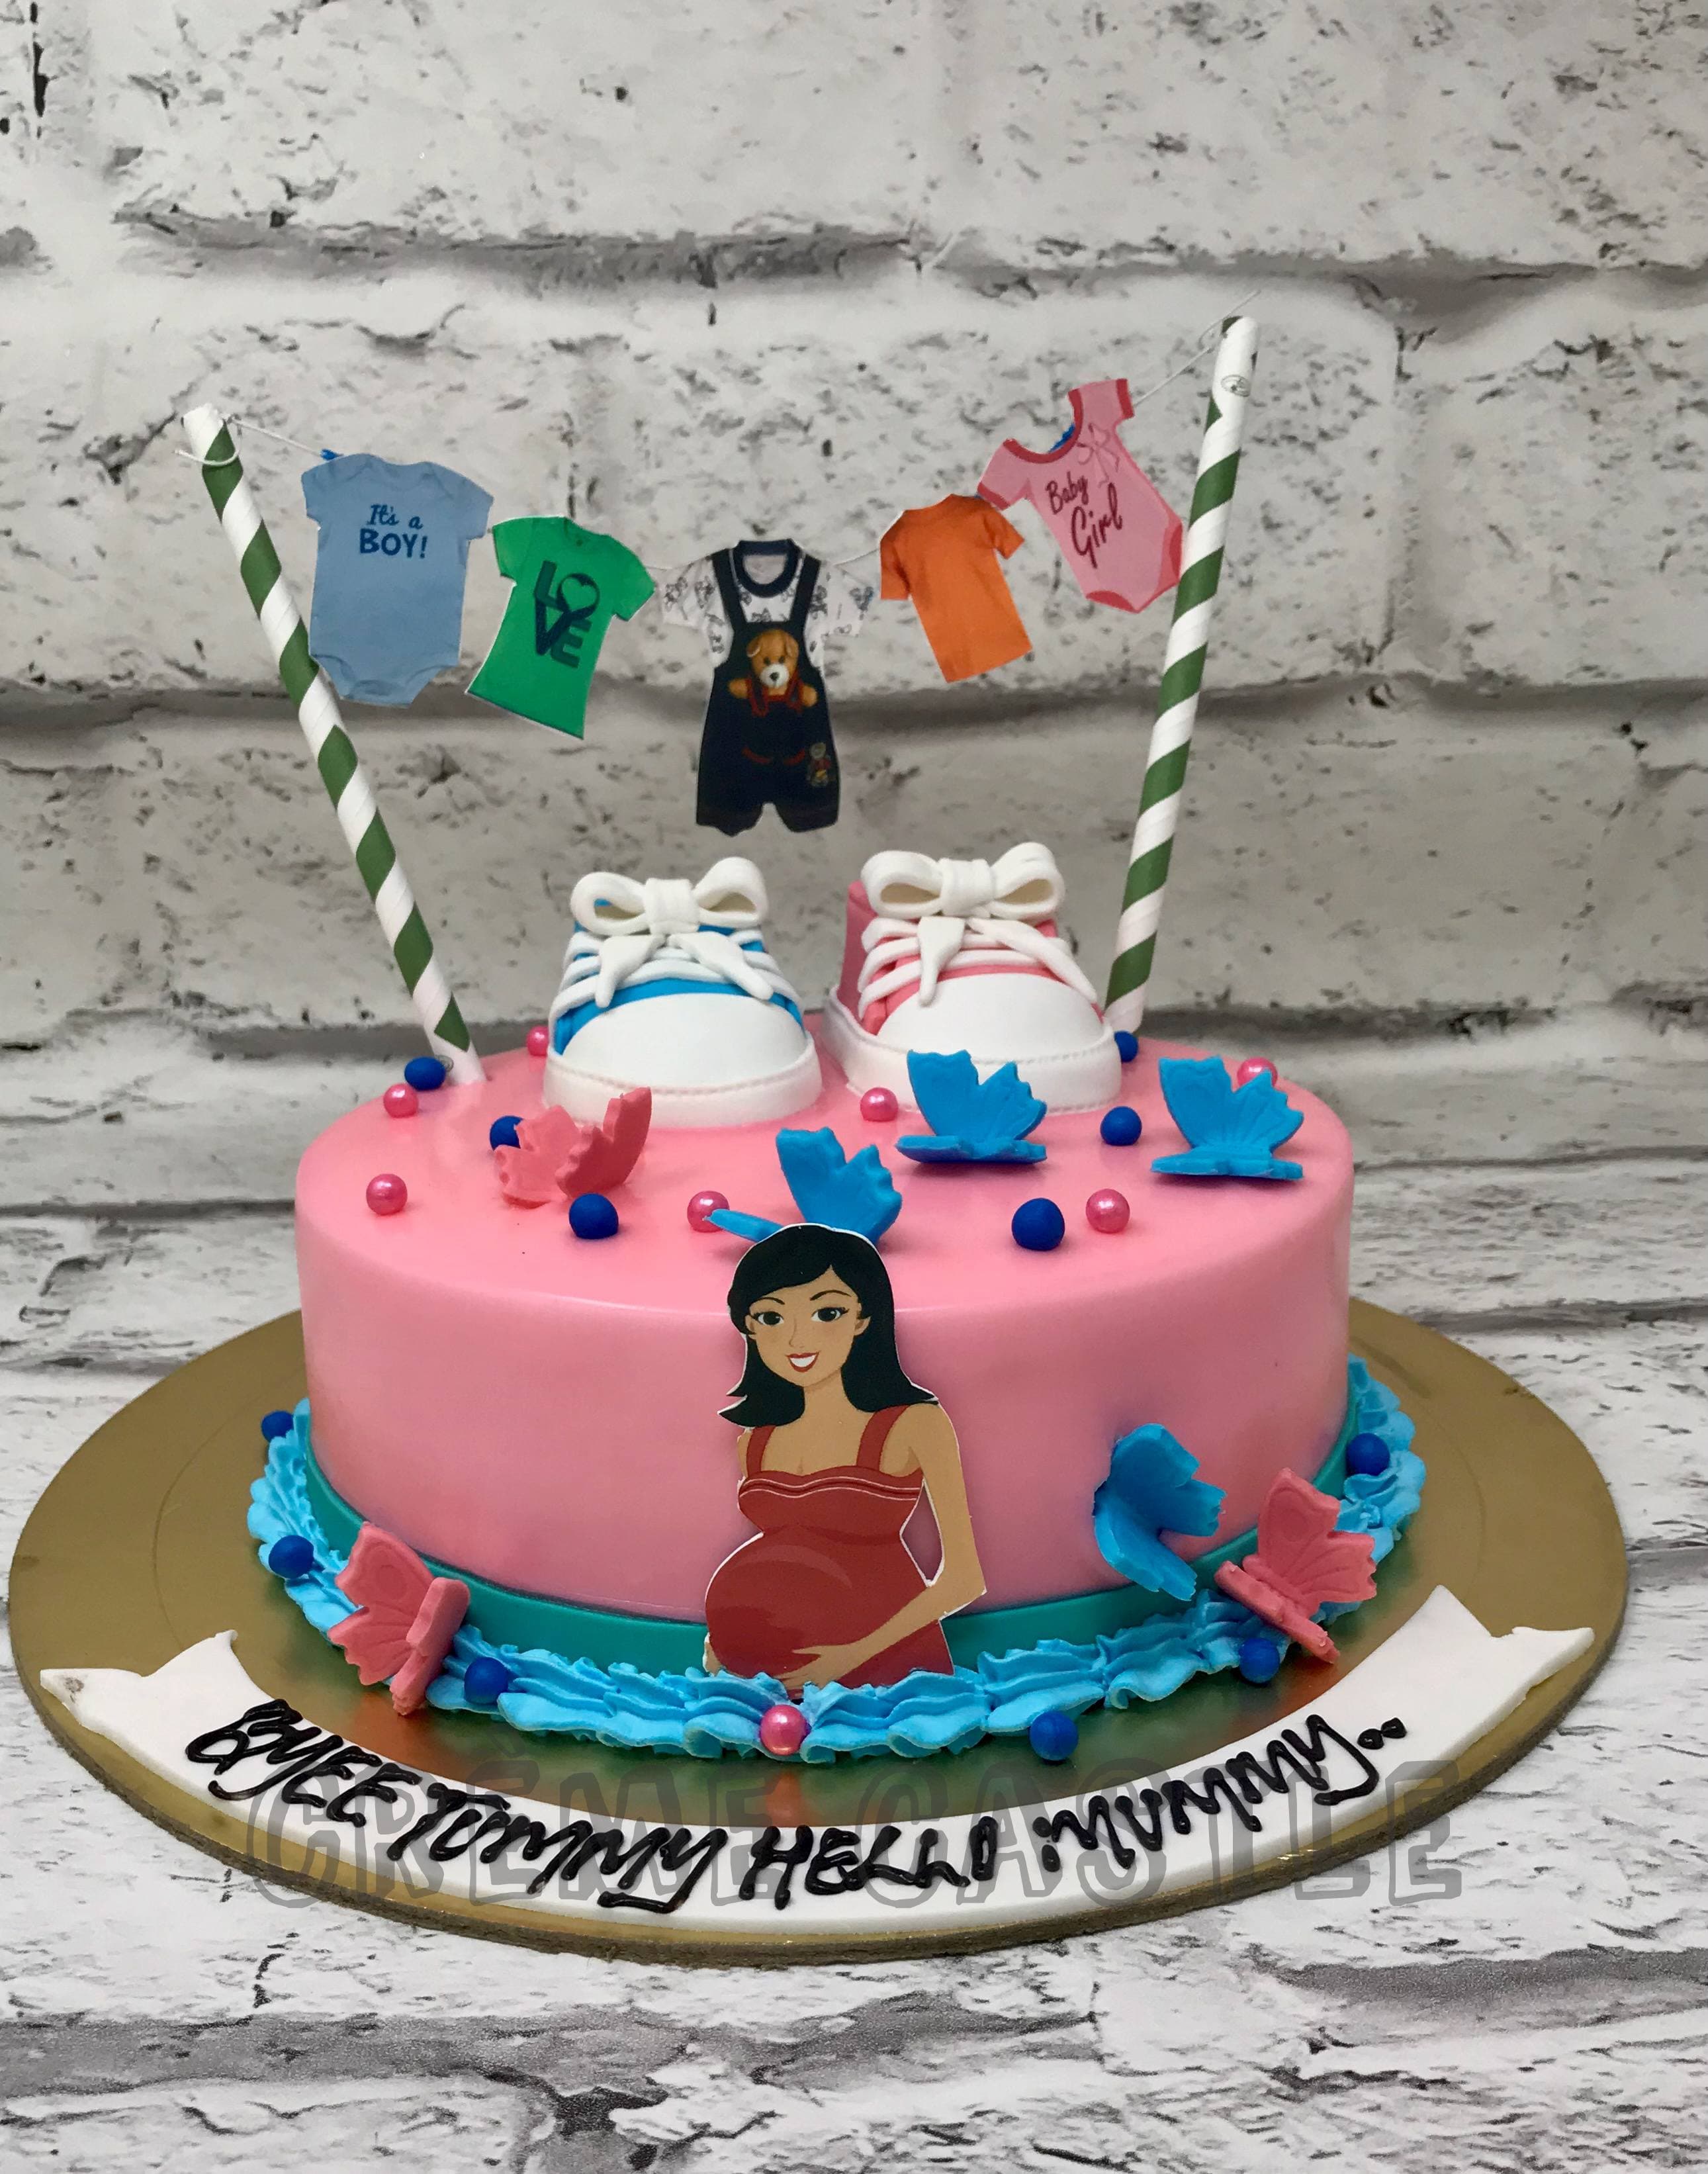 M568) New Born Baby Theme Cake (1 Kg). – Tricity 24